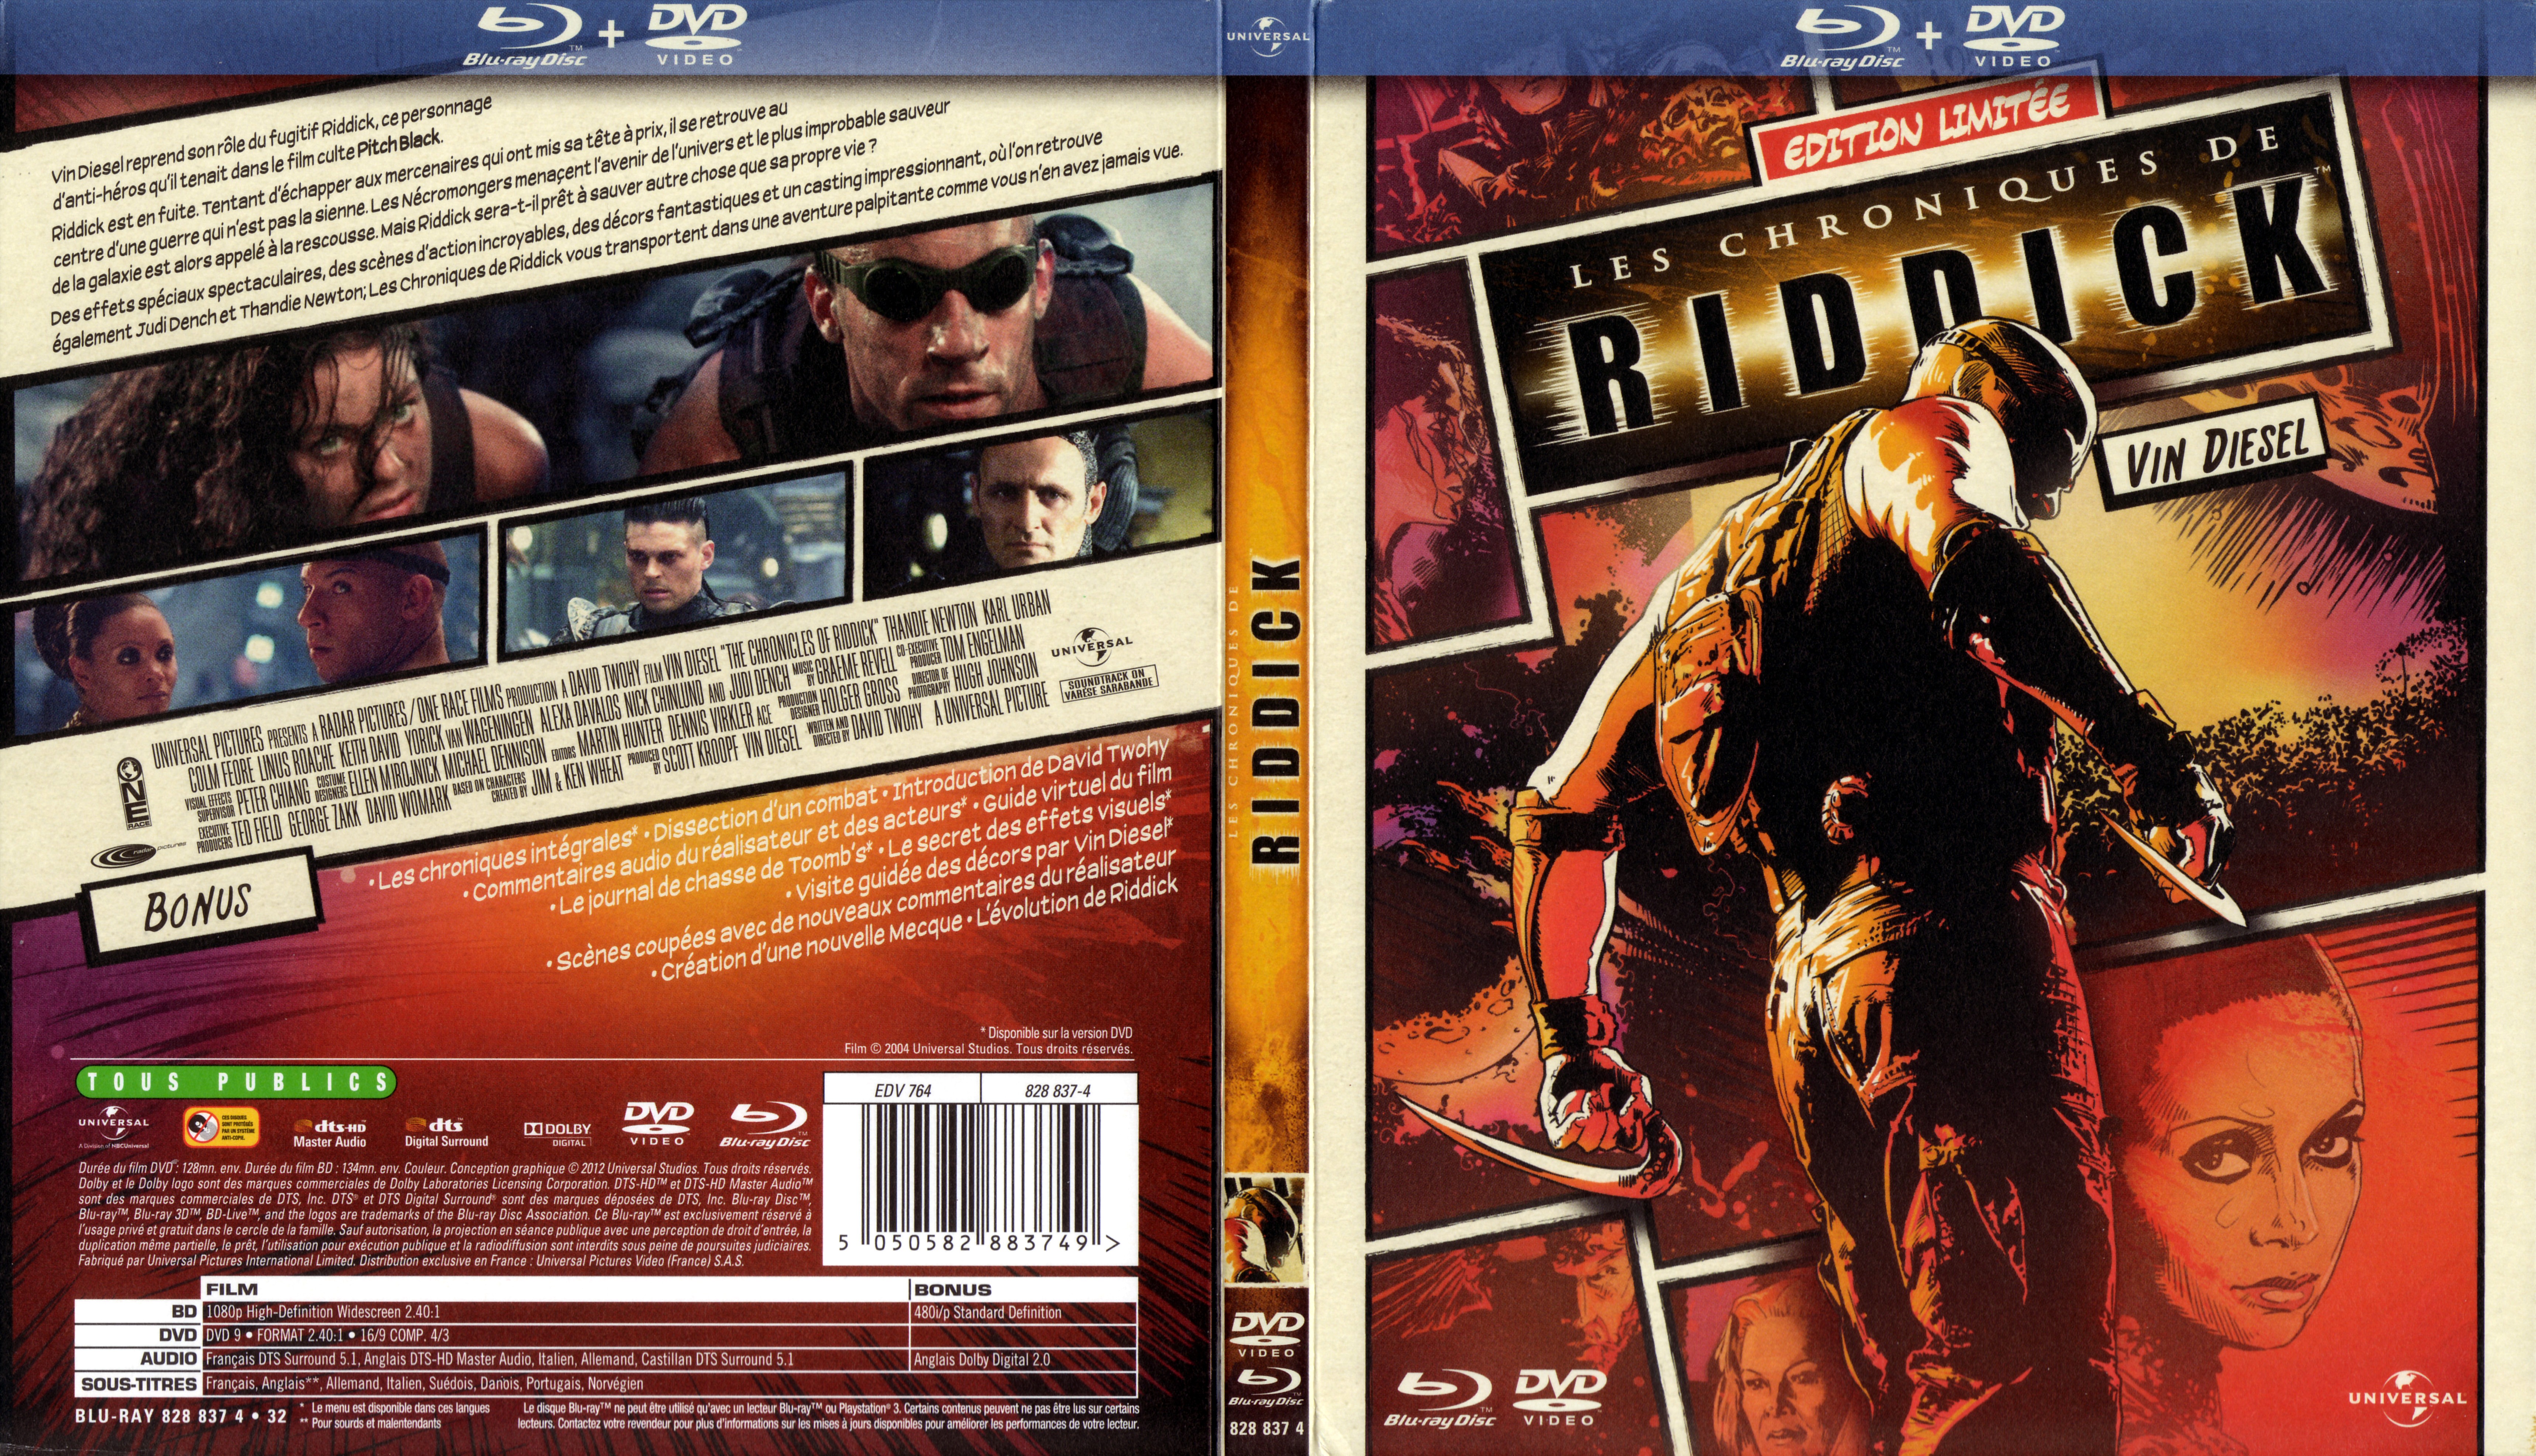 Jaquette DVD Les chroniques de Riddick (BLU-RAY) v2